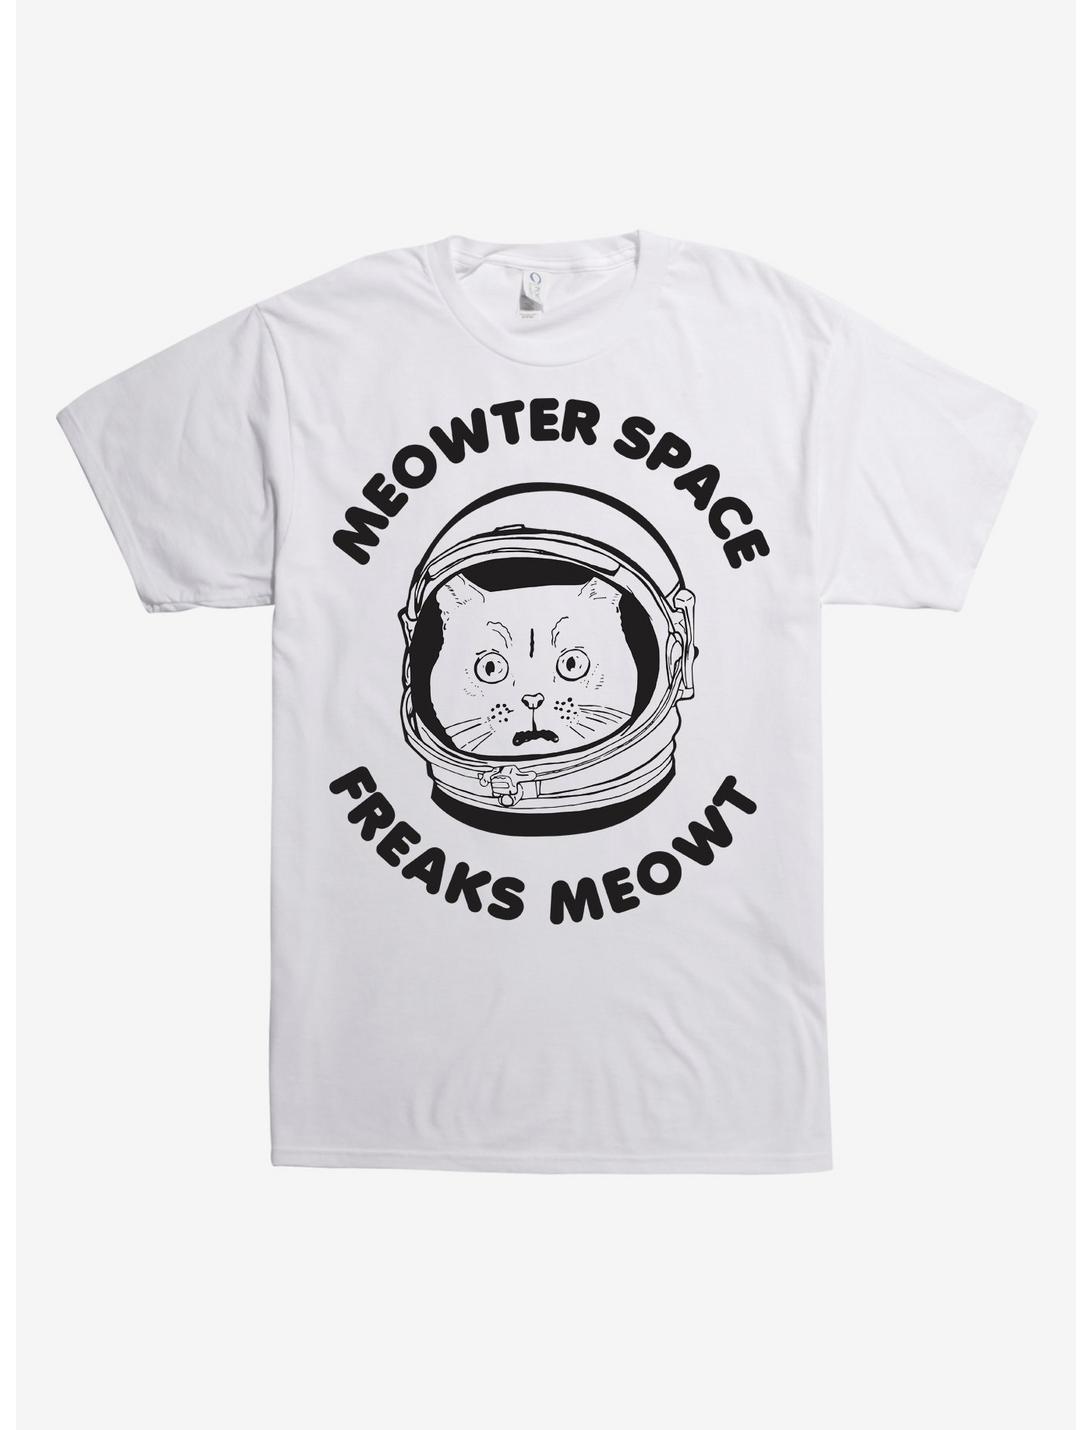 Meowter Space Freaks Meow T-Shirt, WHITE, hi-res